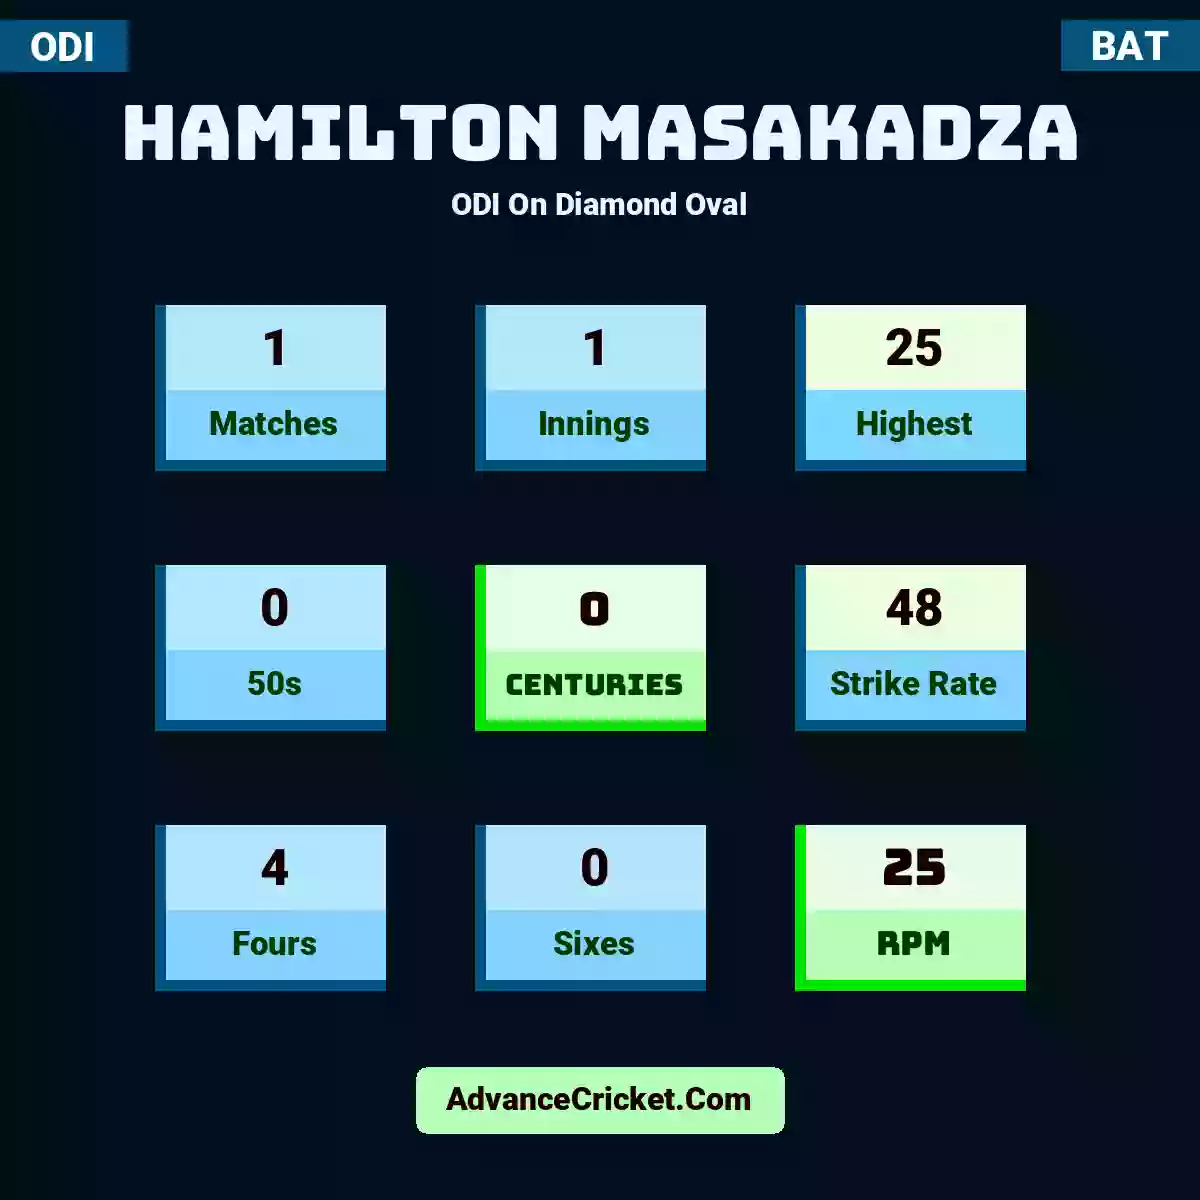 Hamilton Masakadza ODI  On Diamond Oval, Hamilton Masakadza played 1 matches, scored 25 runs as highest, 0 half-centuries, and 0 centuries, with a strike rate of 48. H.Masakadza hit 4 fours and 0 sixes, with an RPM of 25.